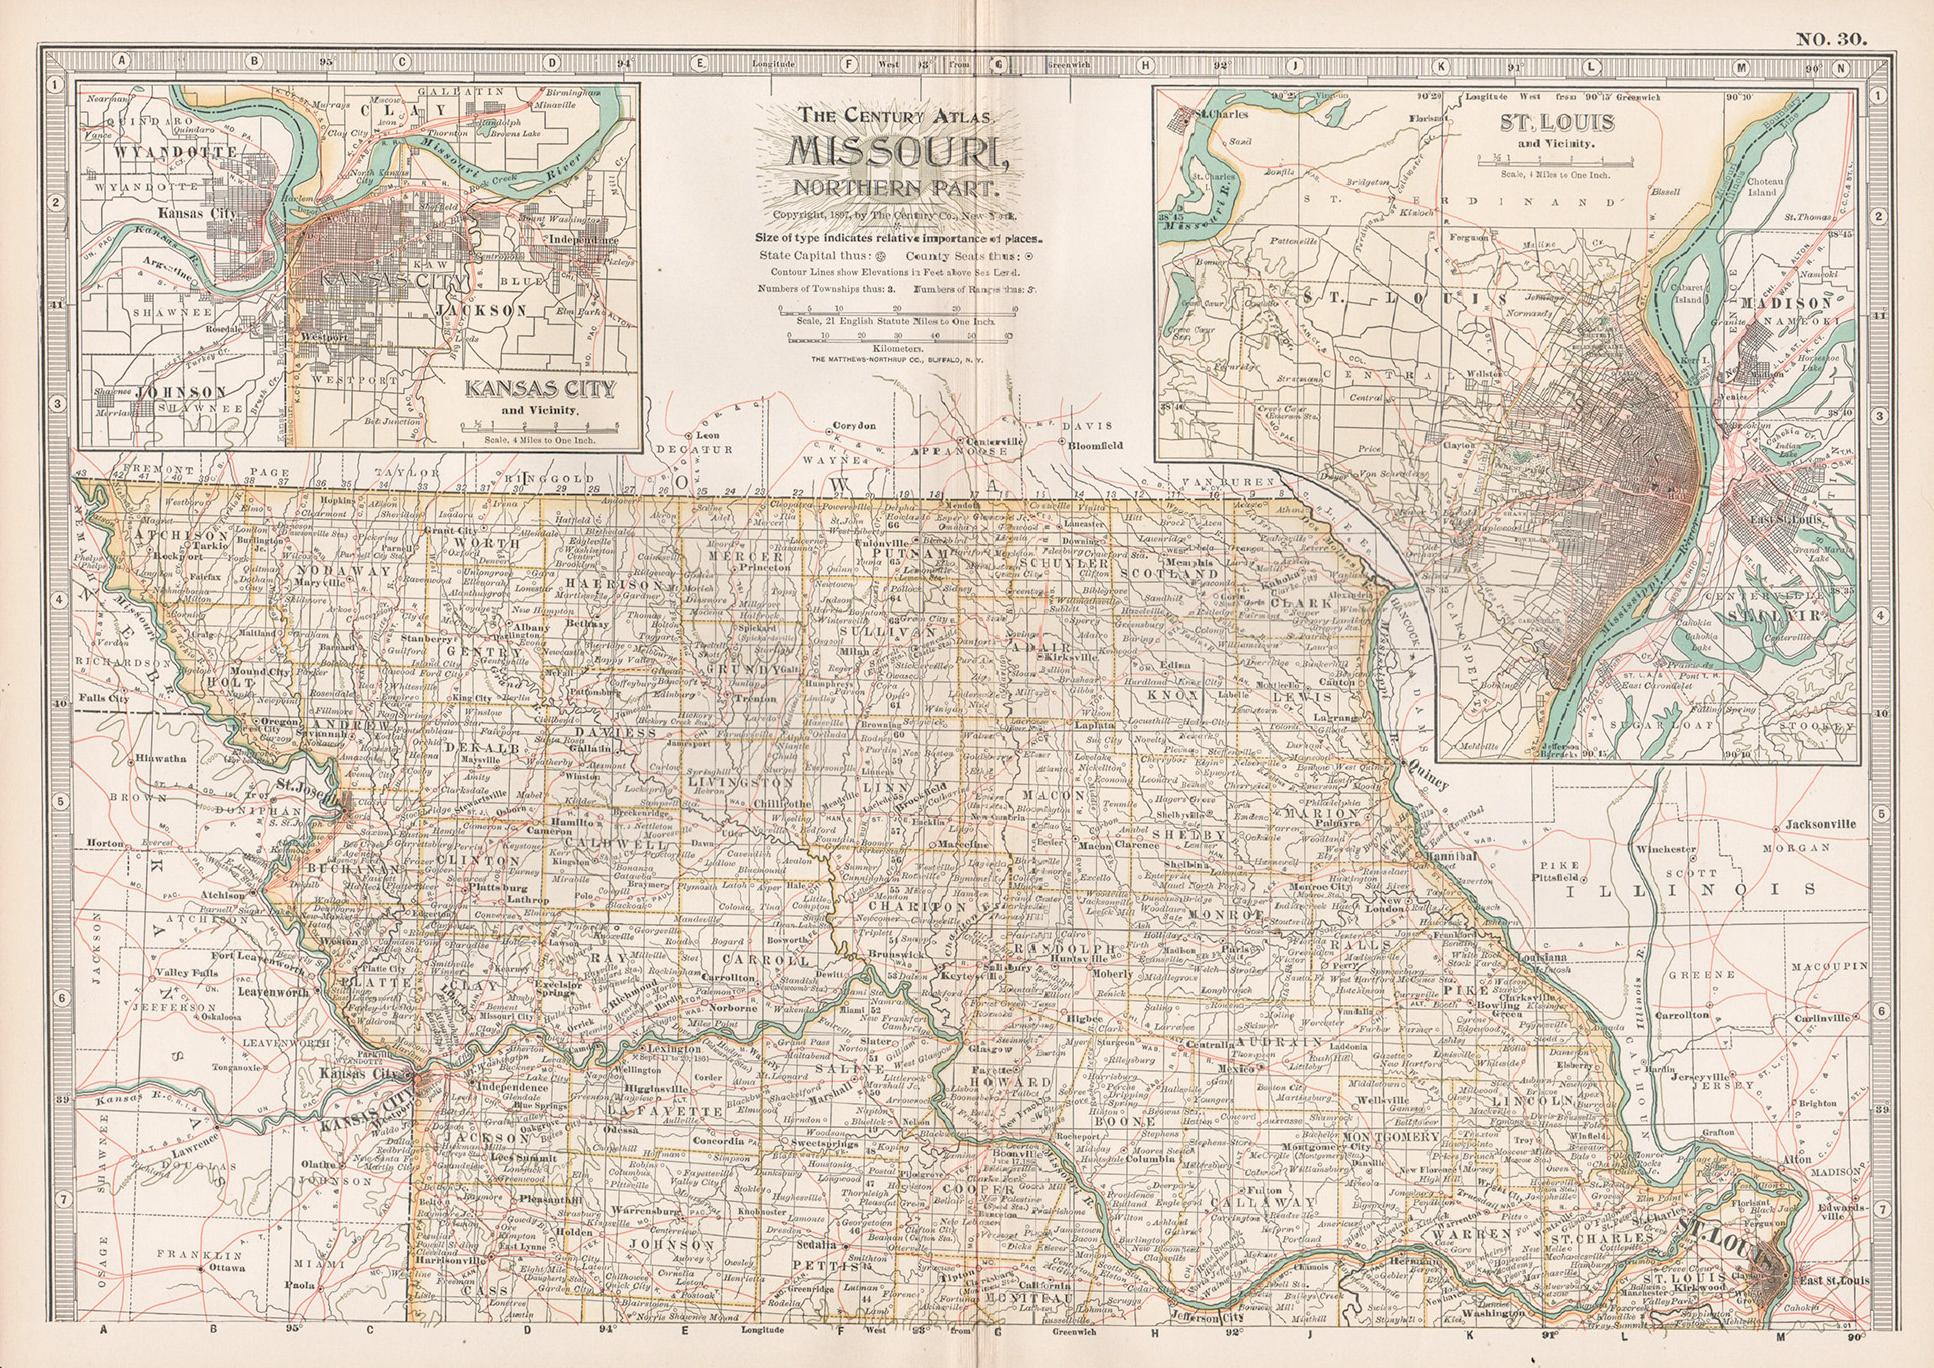 Missouri. Northern Part. USA. Century Atlas state antique vintage map